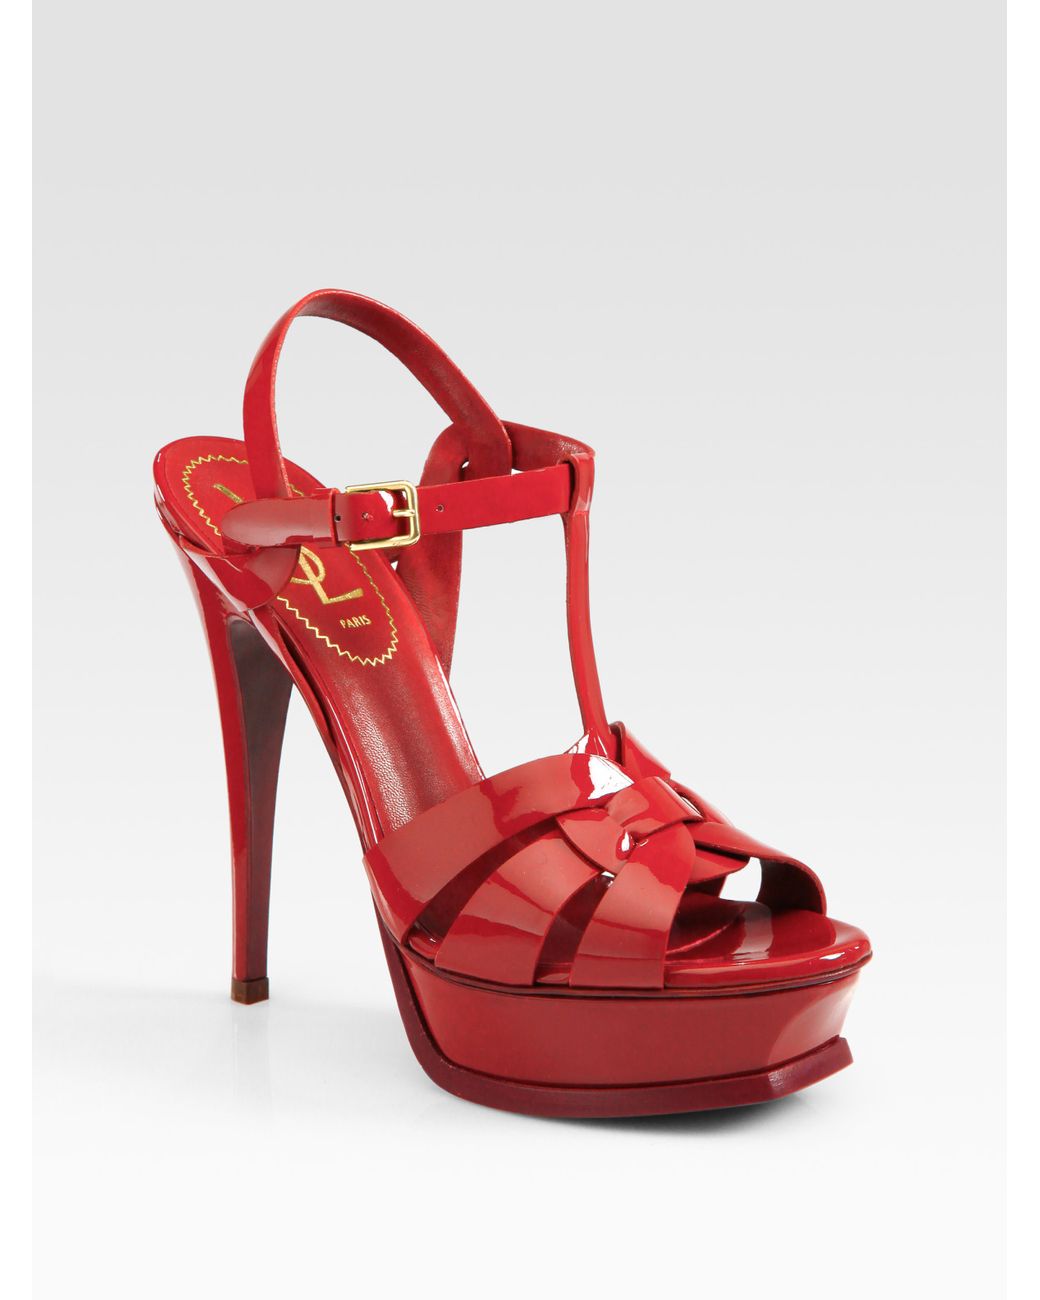 Saint Laurent Ysl Tribute Patent Leather Platform Sandals in Red | Lyst